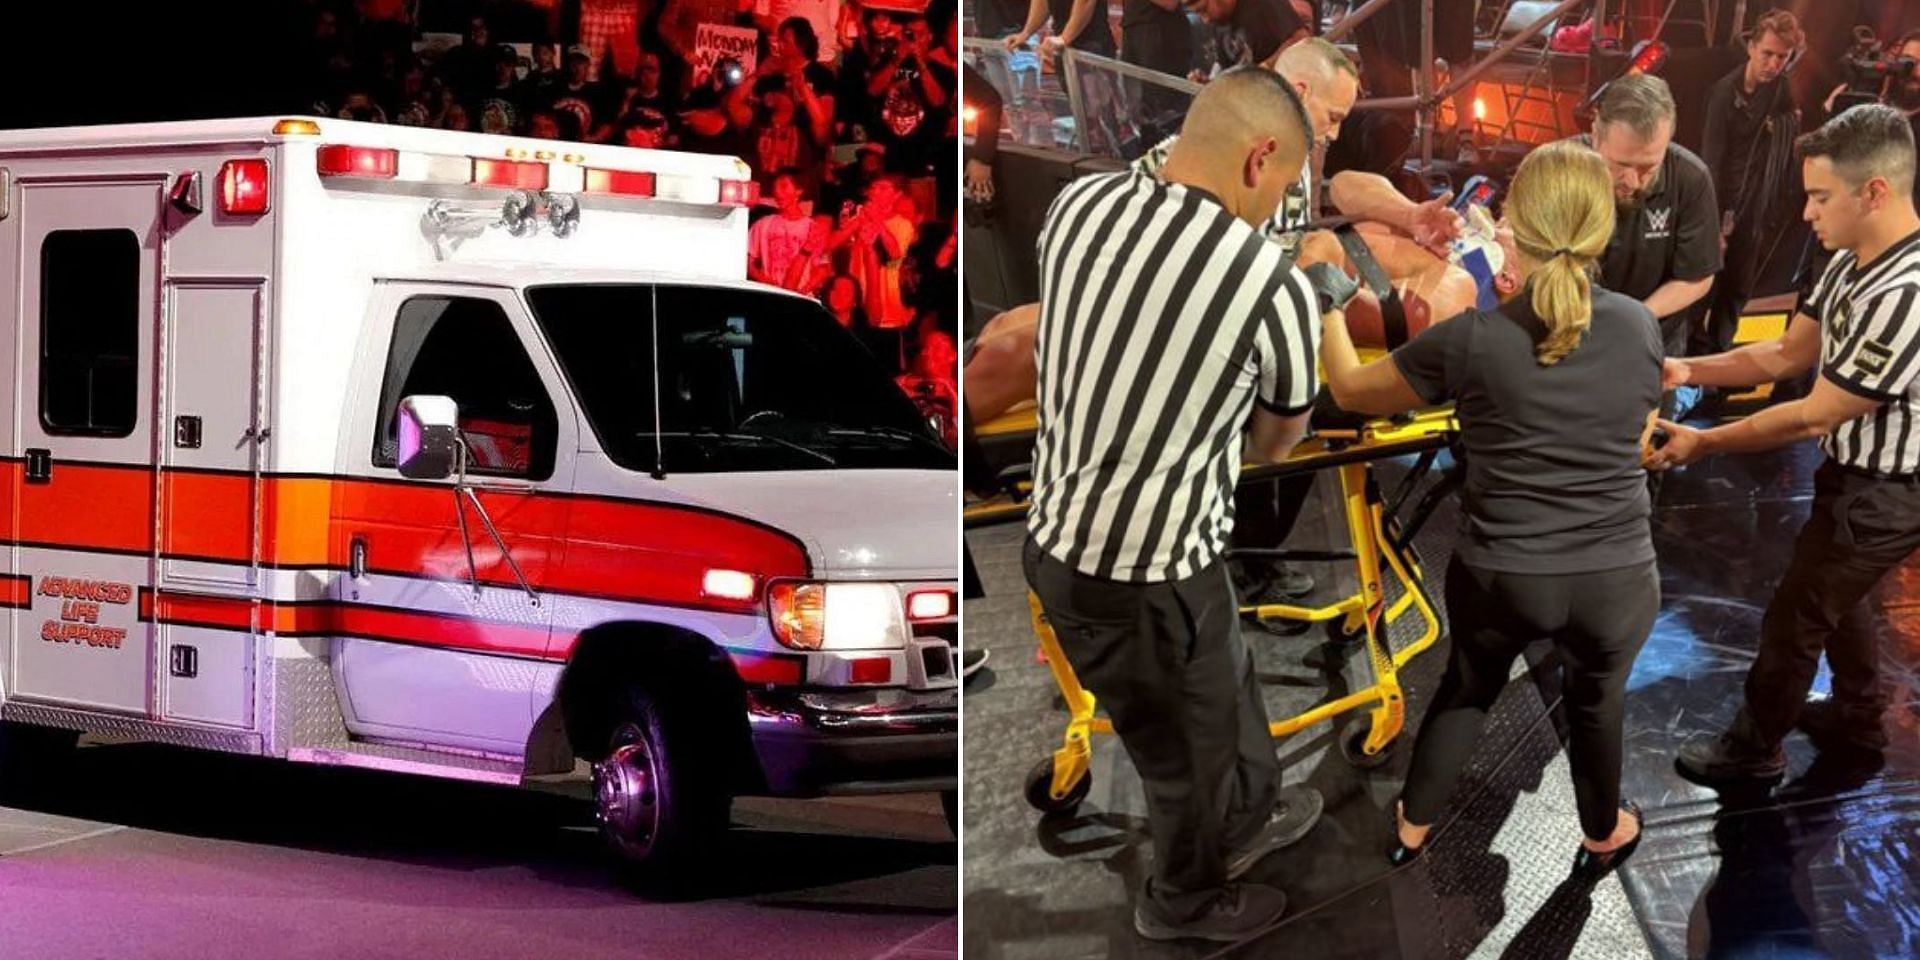 Ilja Dragonuv was injured on NXT